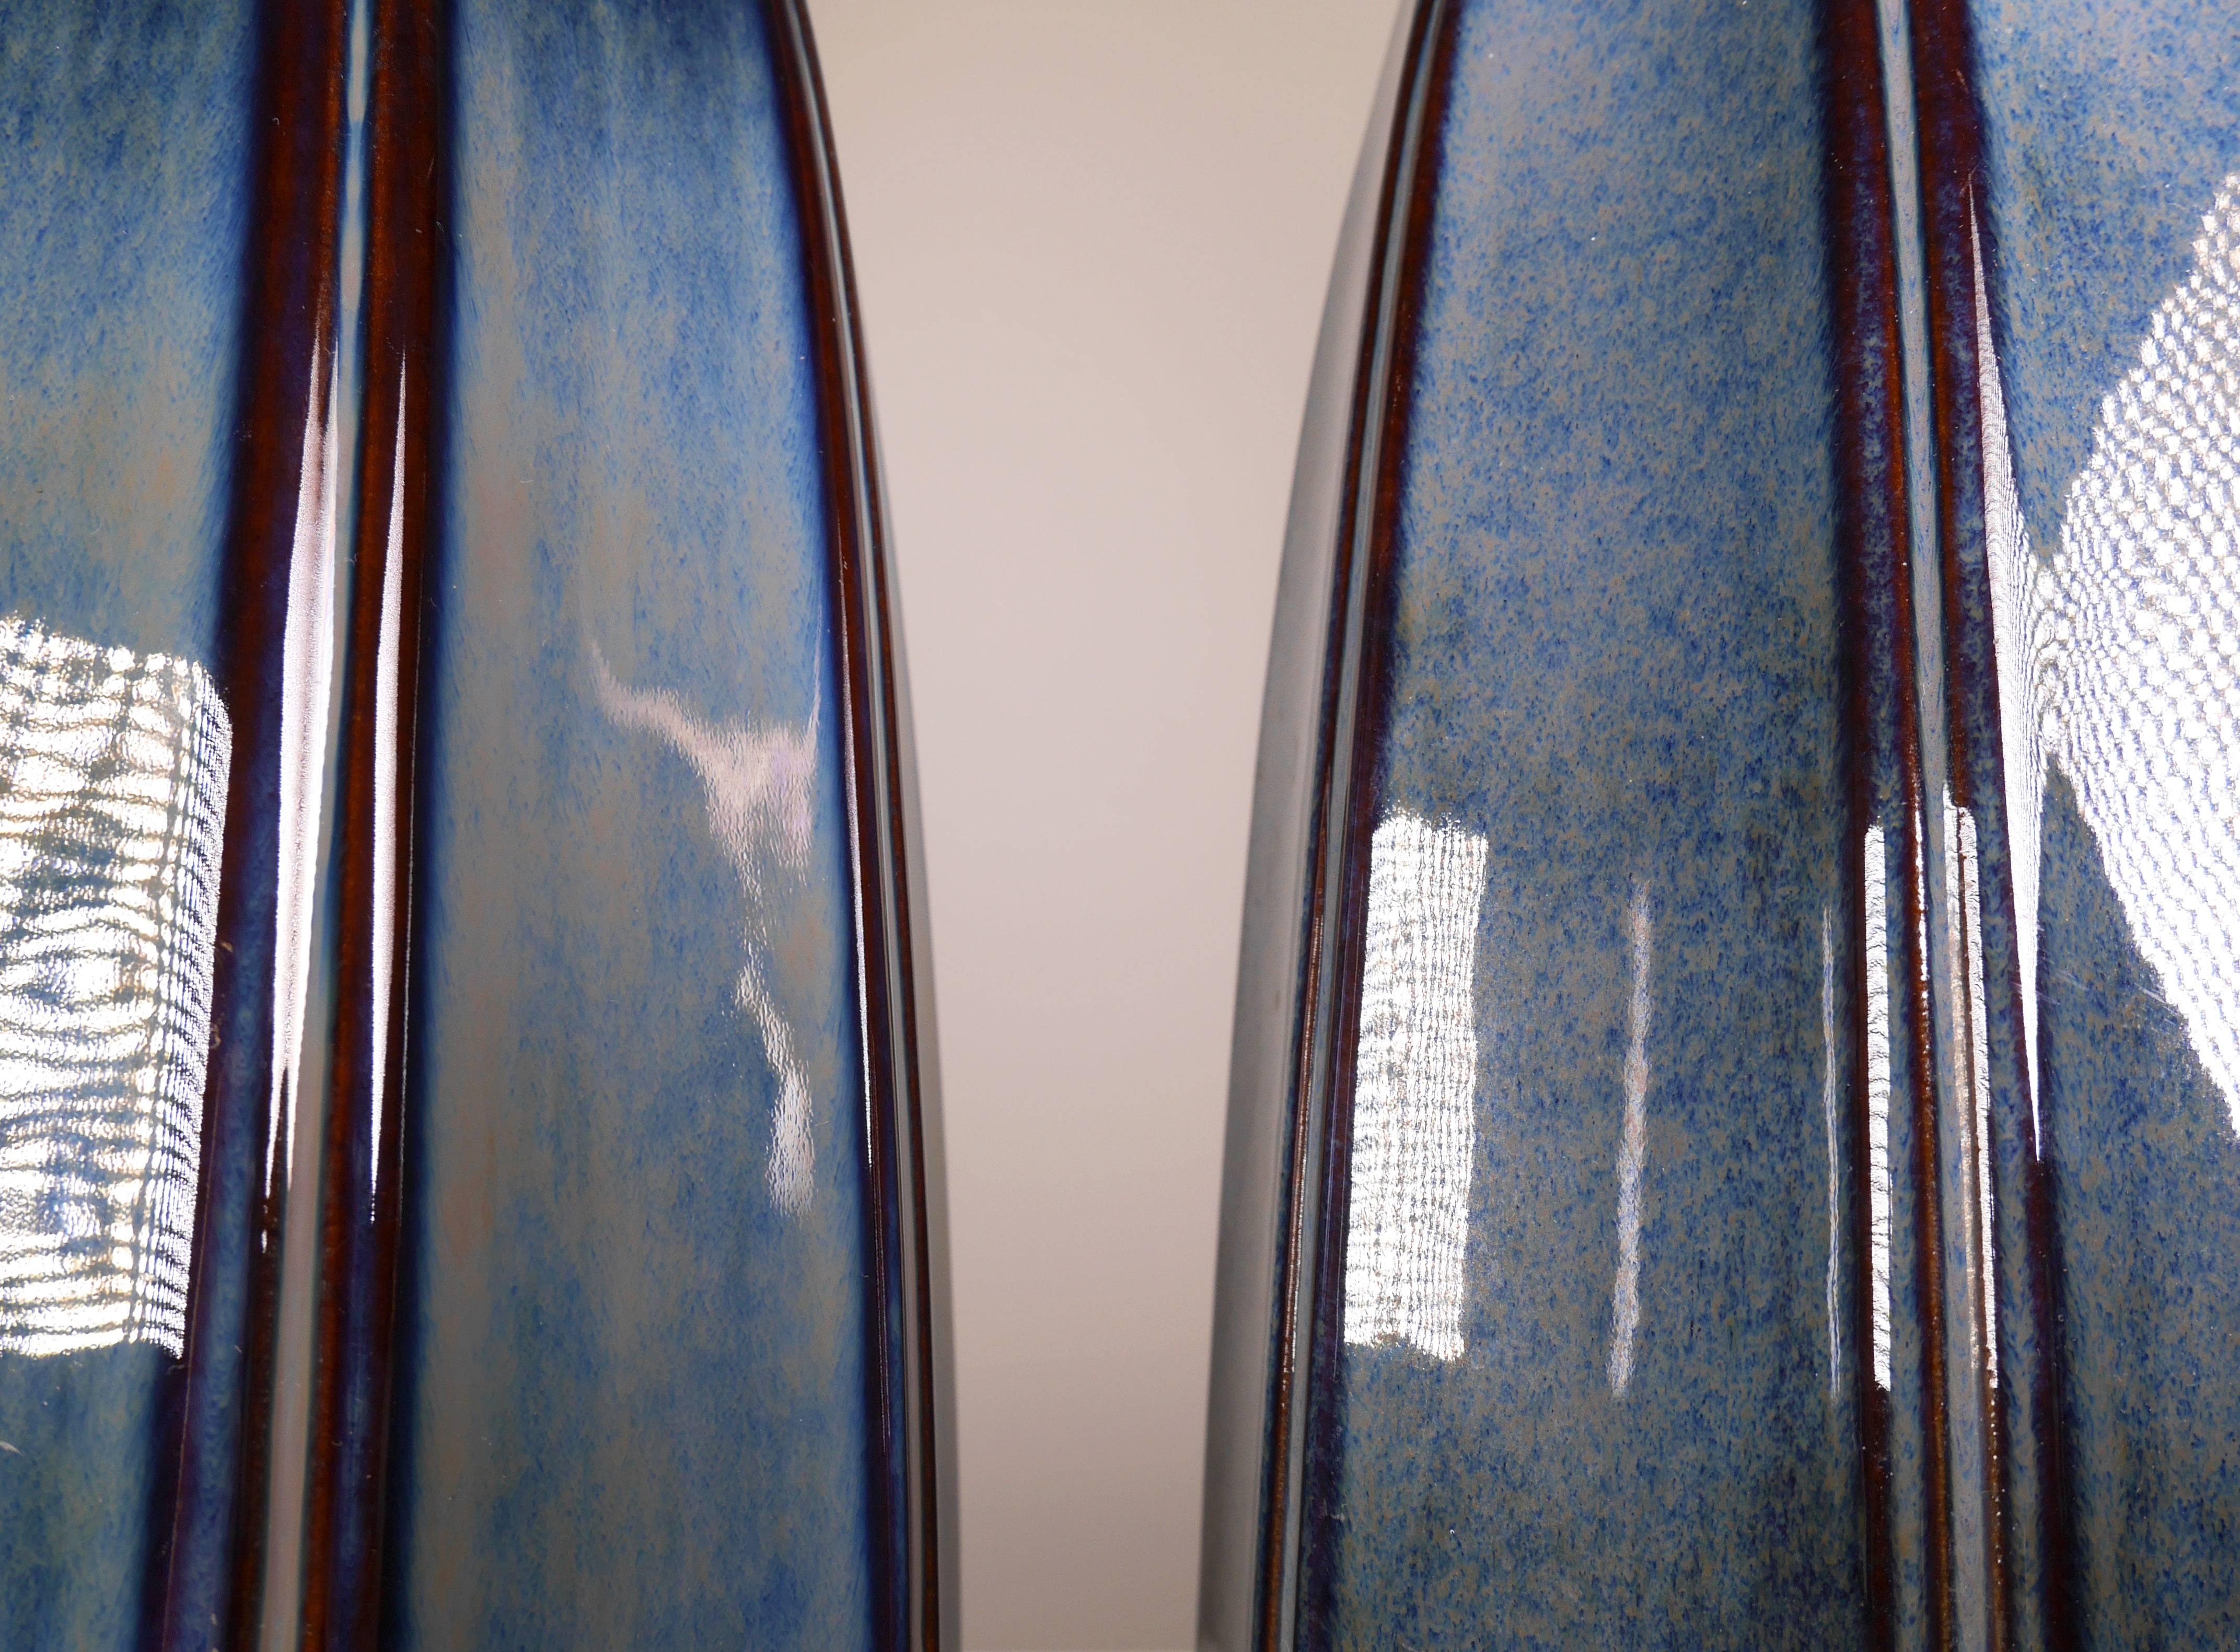 Glazed Pair of Mid-Century Danish Modern Blue Lamps by Einar Johansen for Søholm